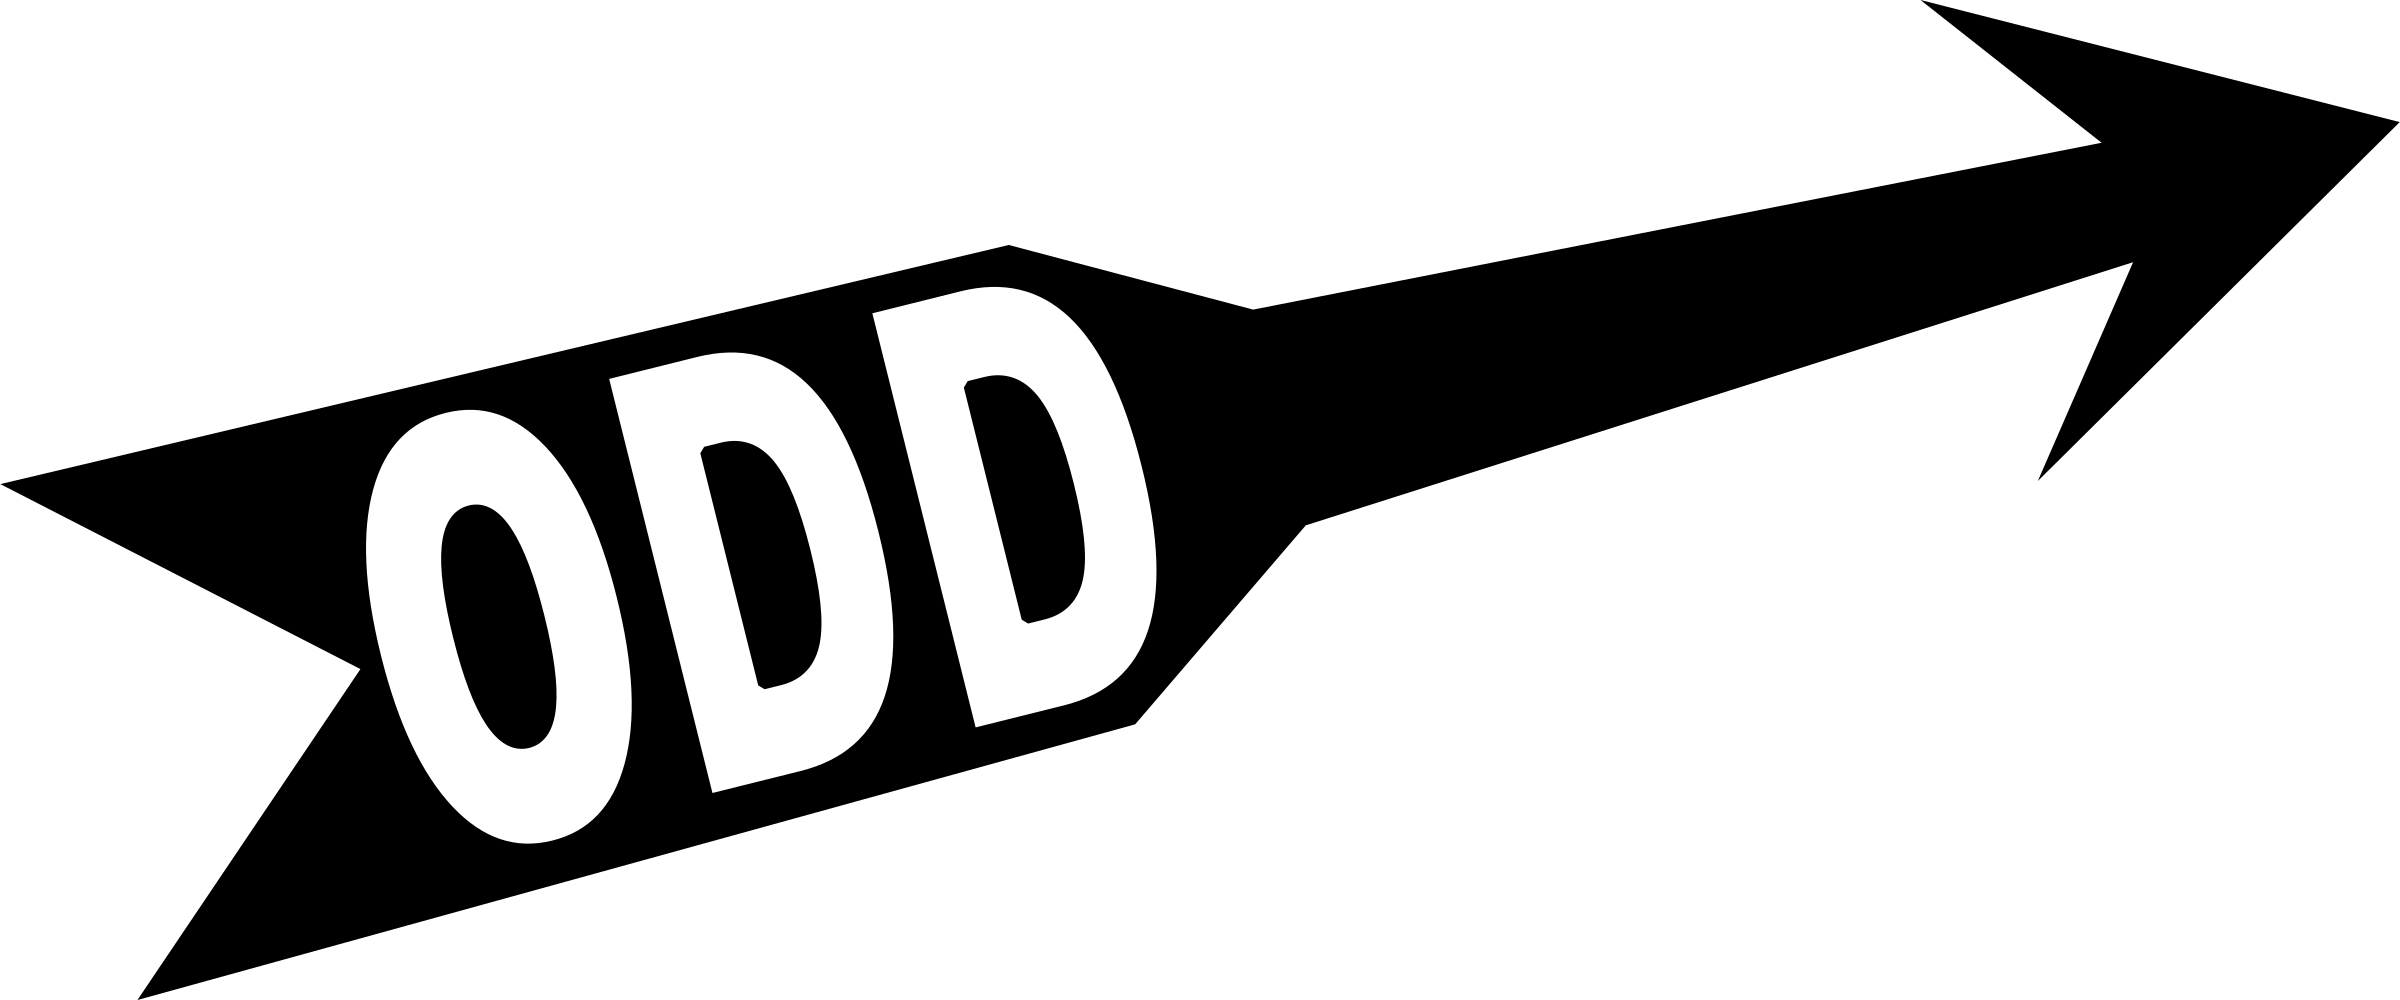 Odd Logo - ODD Logo PNG Transparent & SVG Vector